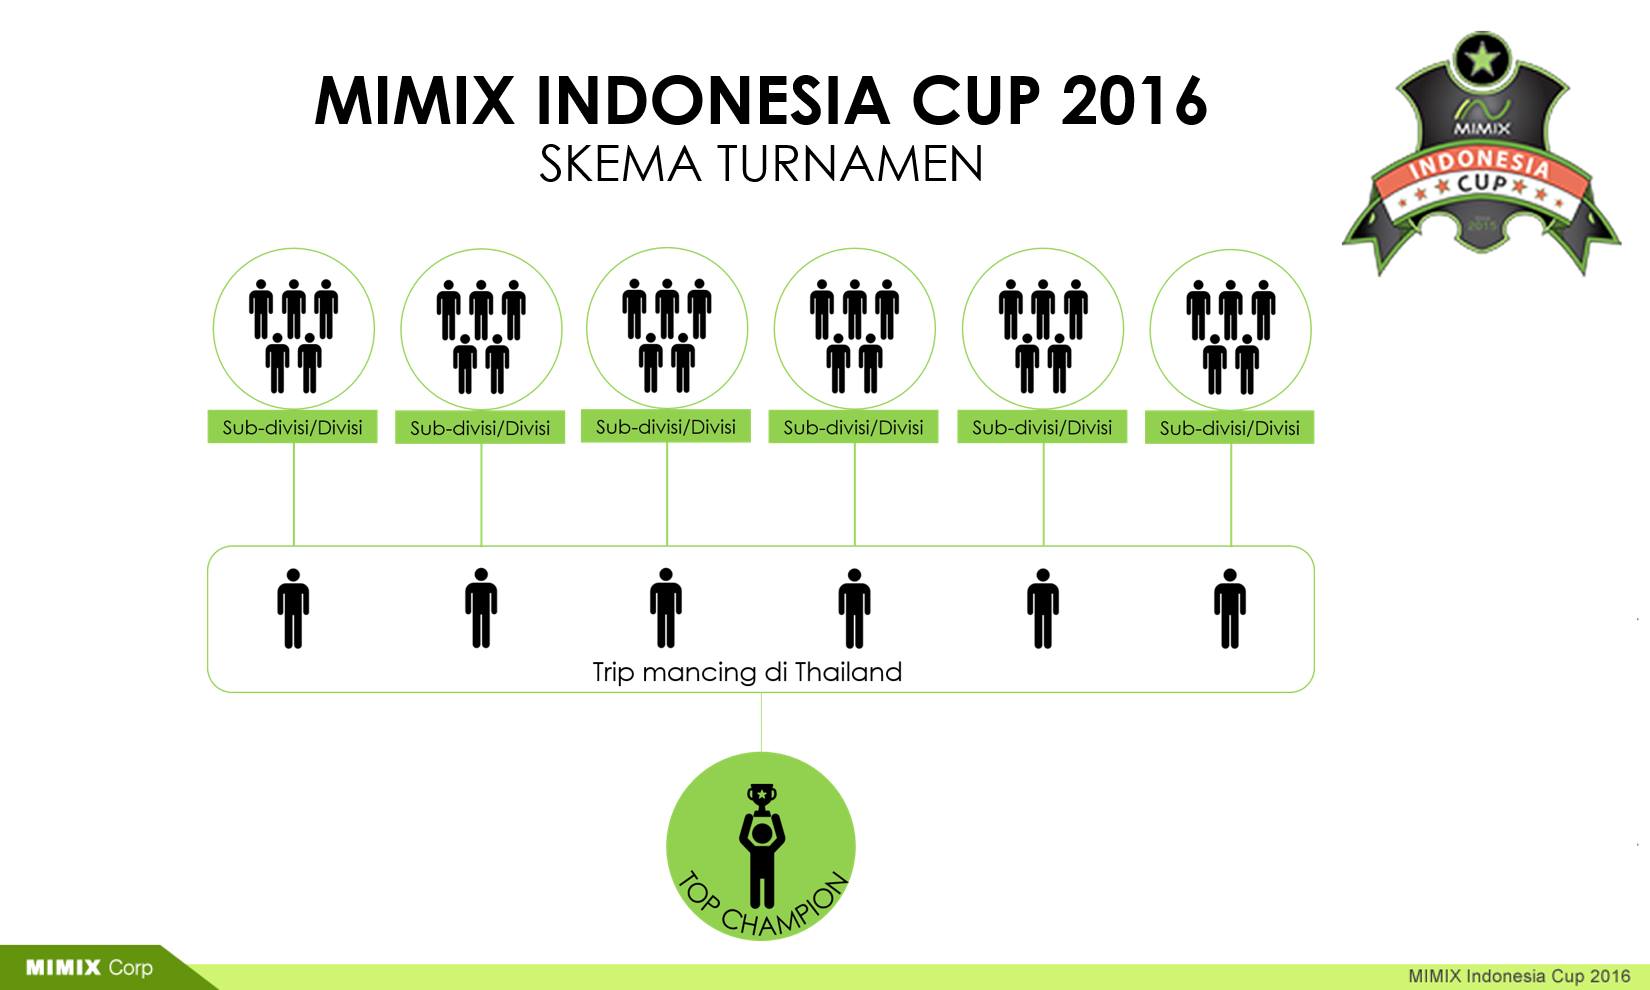 Skema Turnamen Mimix Indonesia Cup 2016